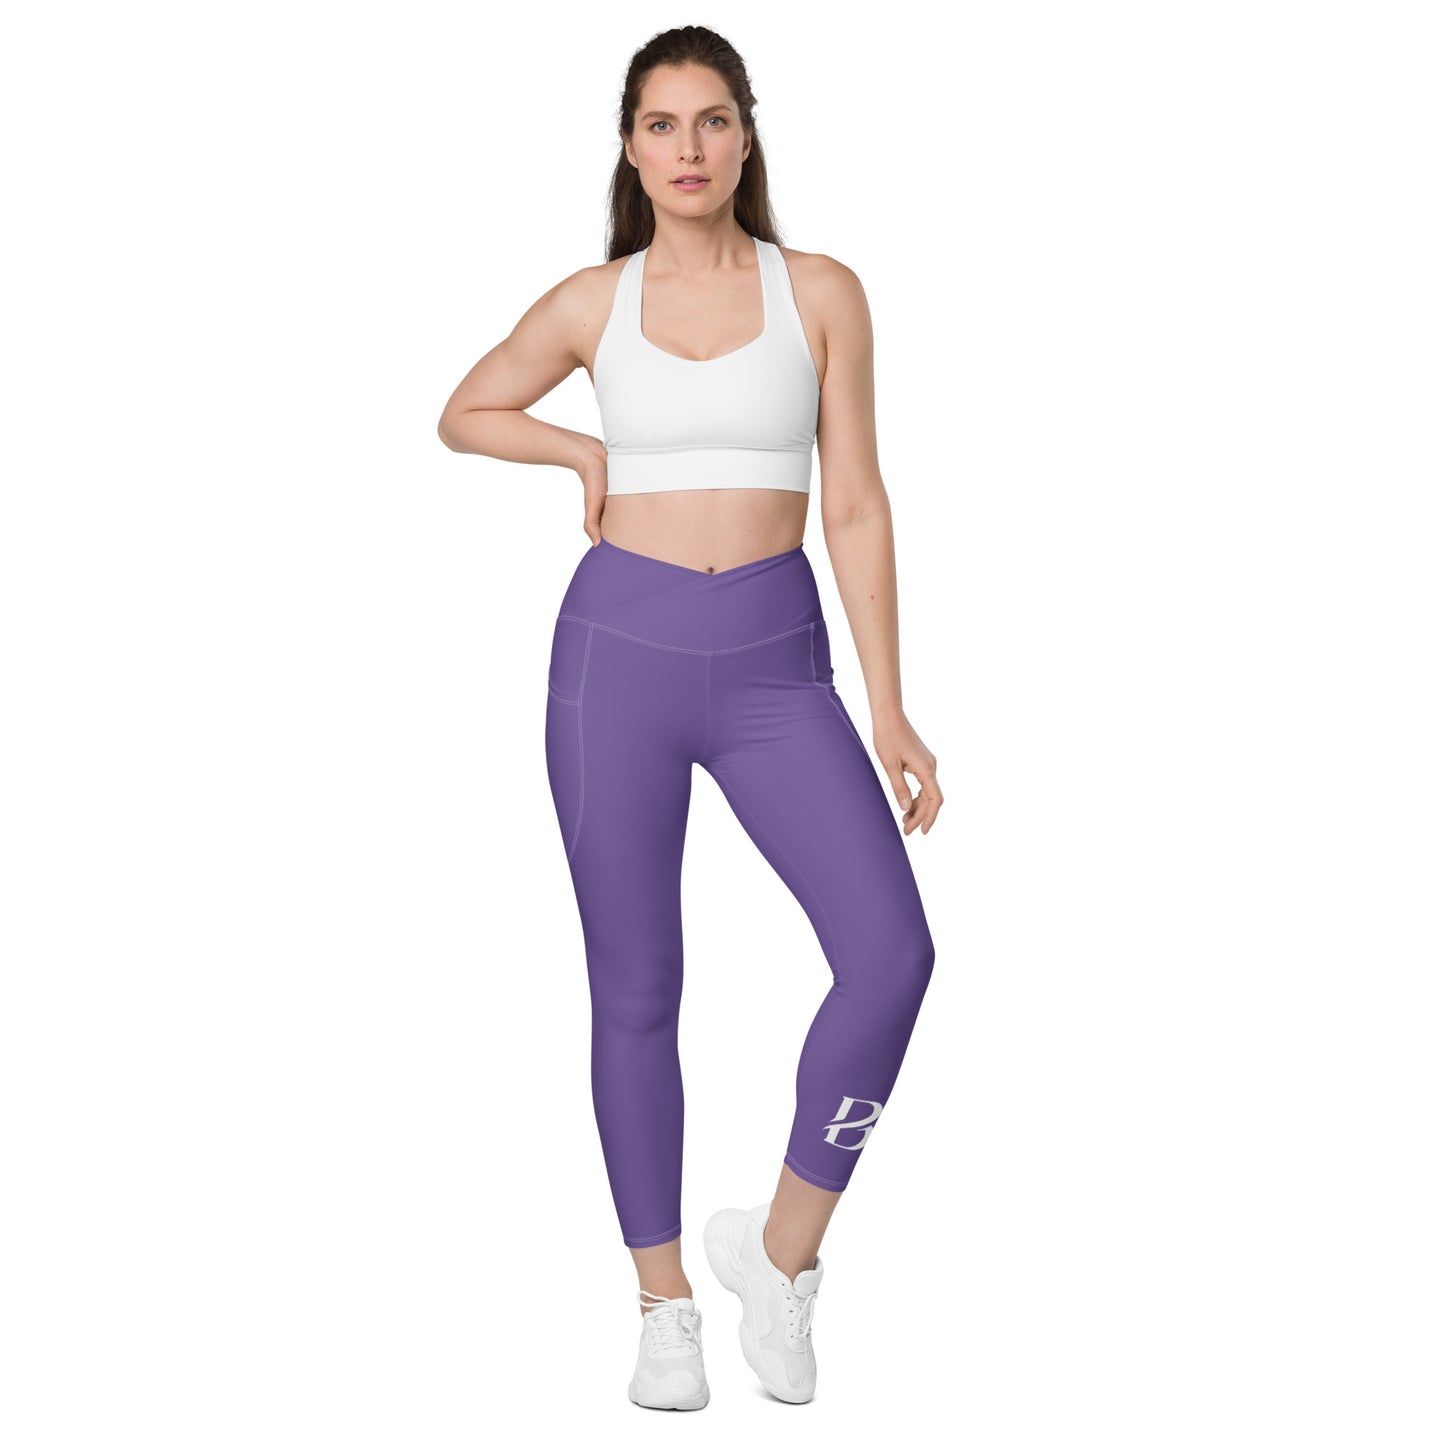 Premium Purple Born 2 Move "B" Crossover leggings with pockets